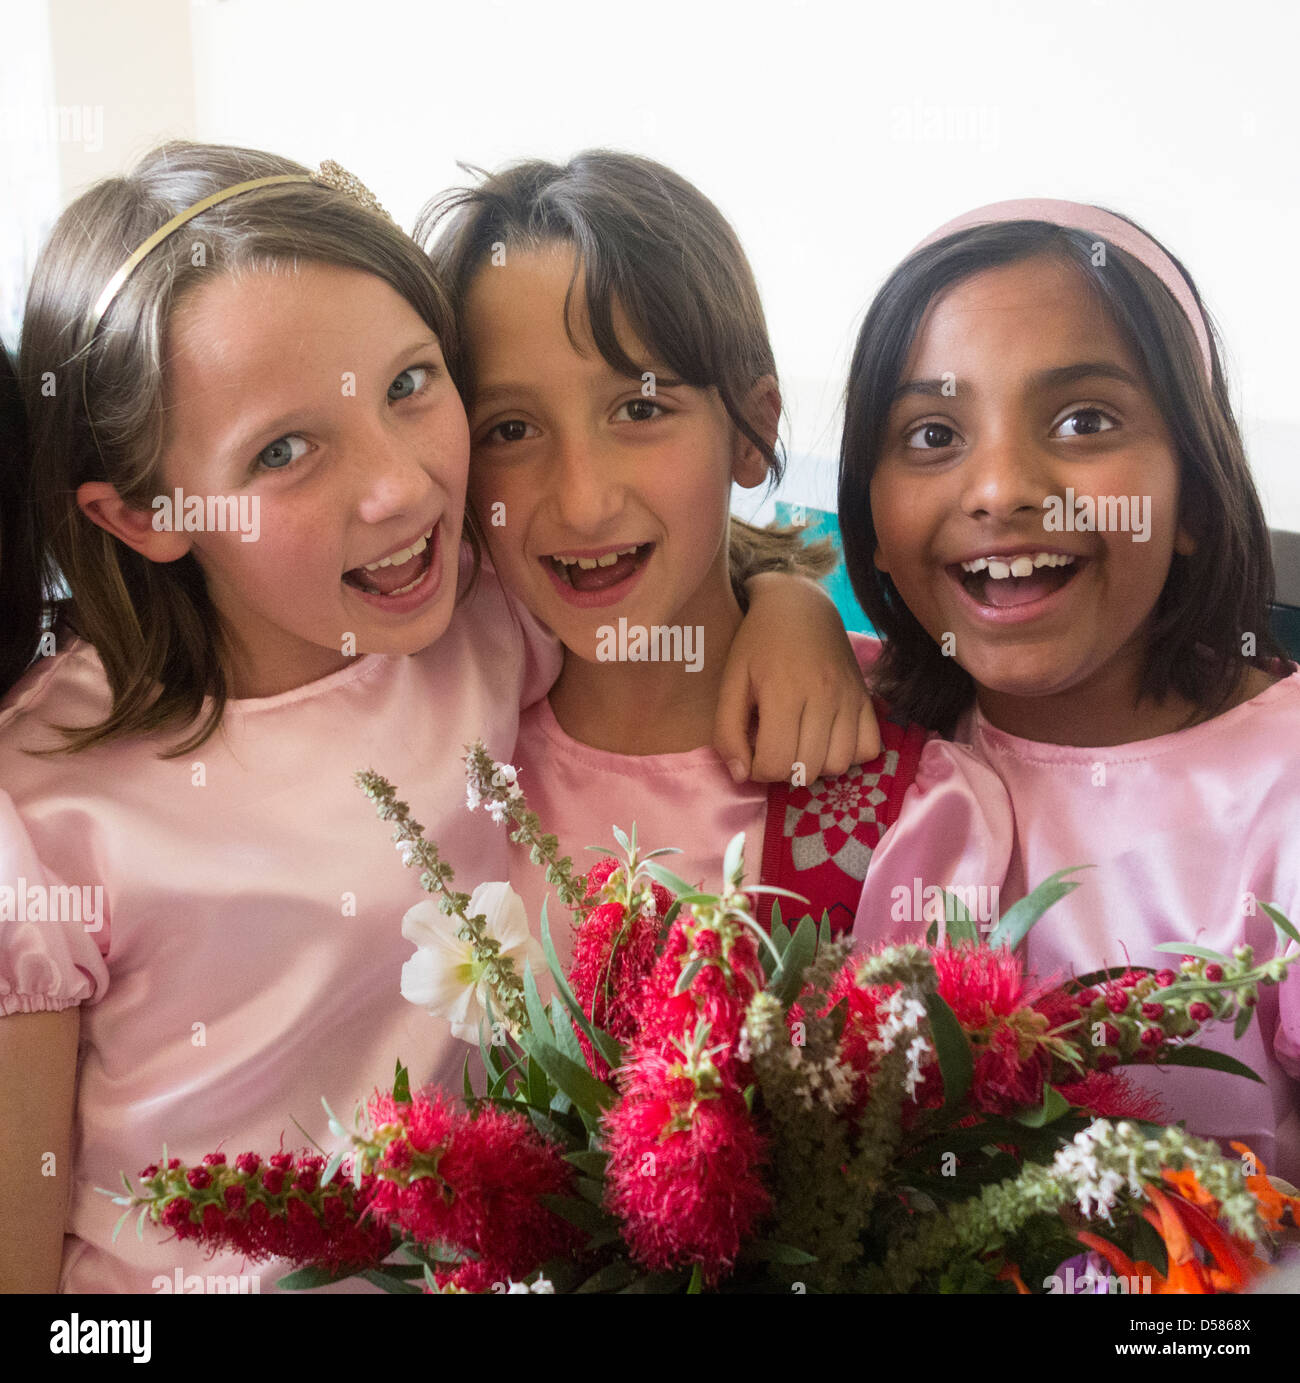 three eight year old Arab girls celebrating with flowers Stock Photo